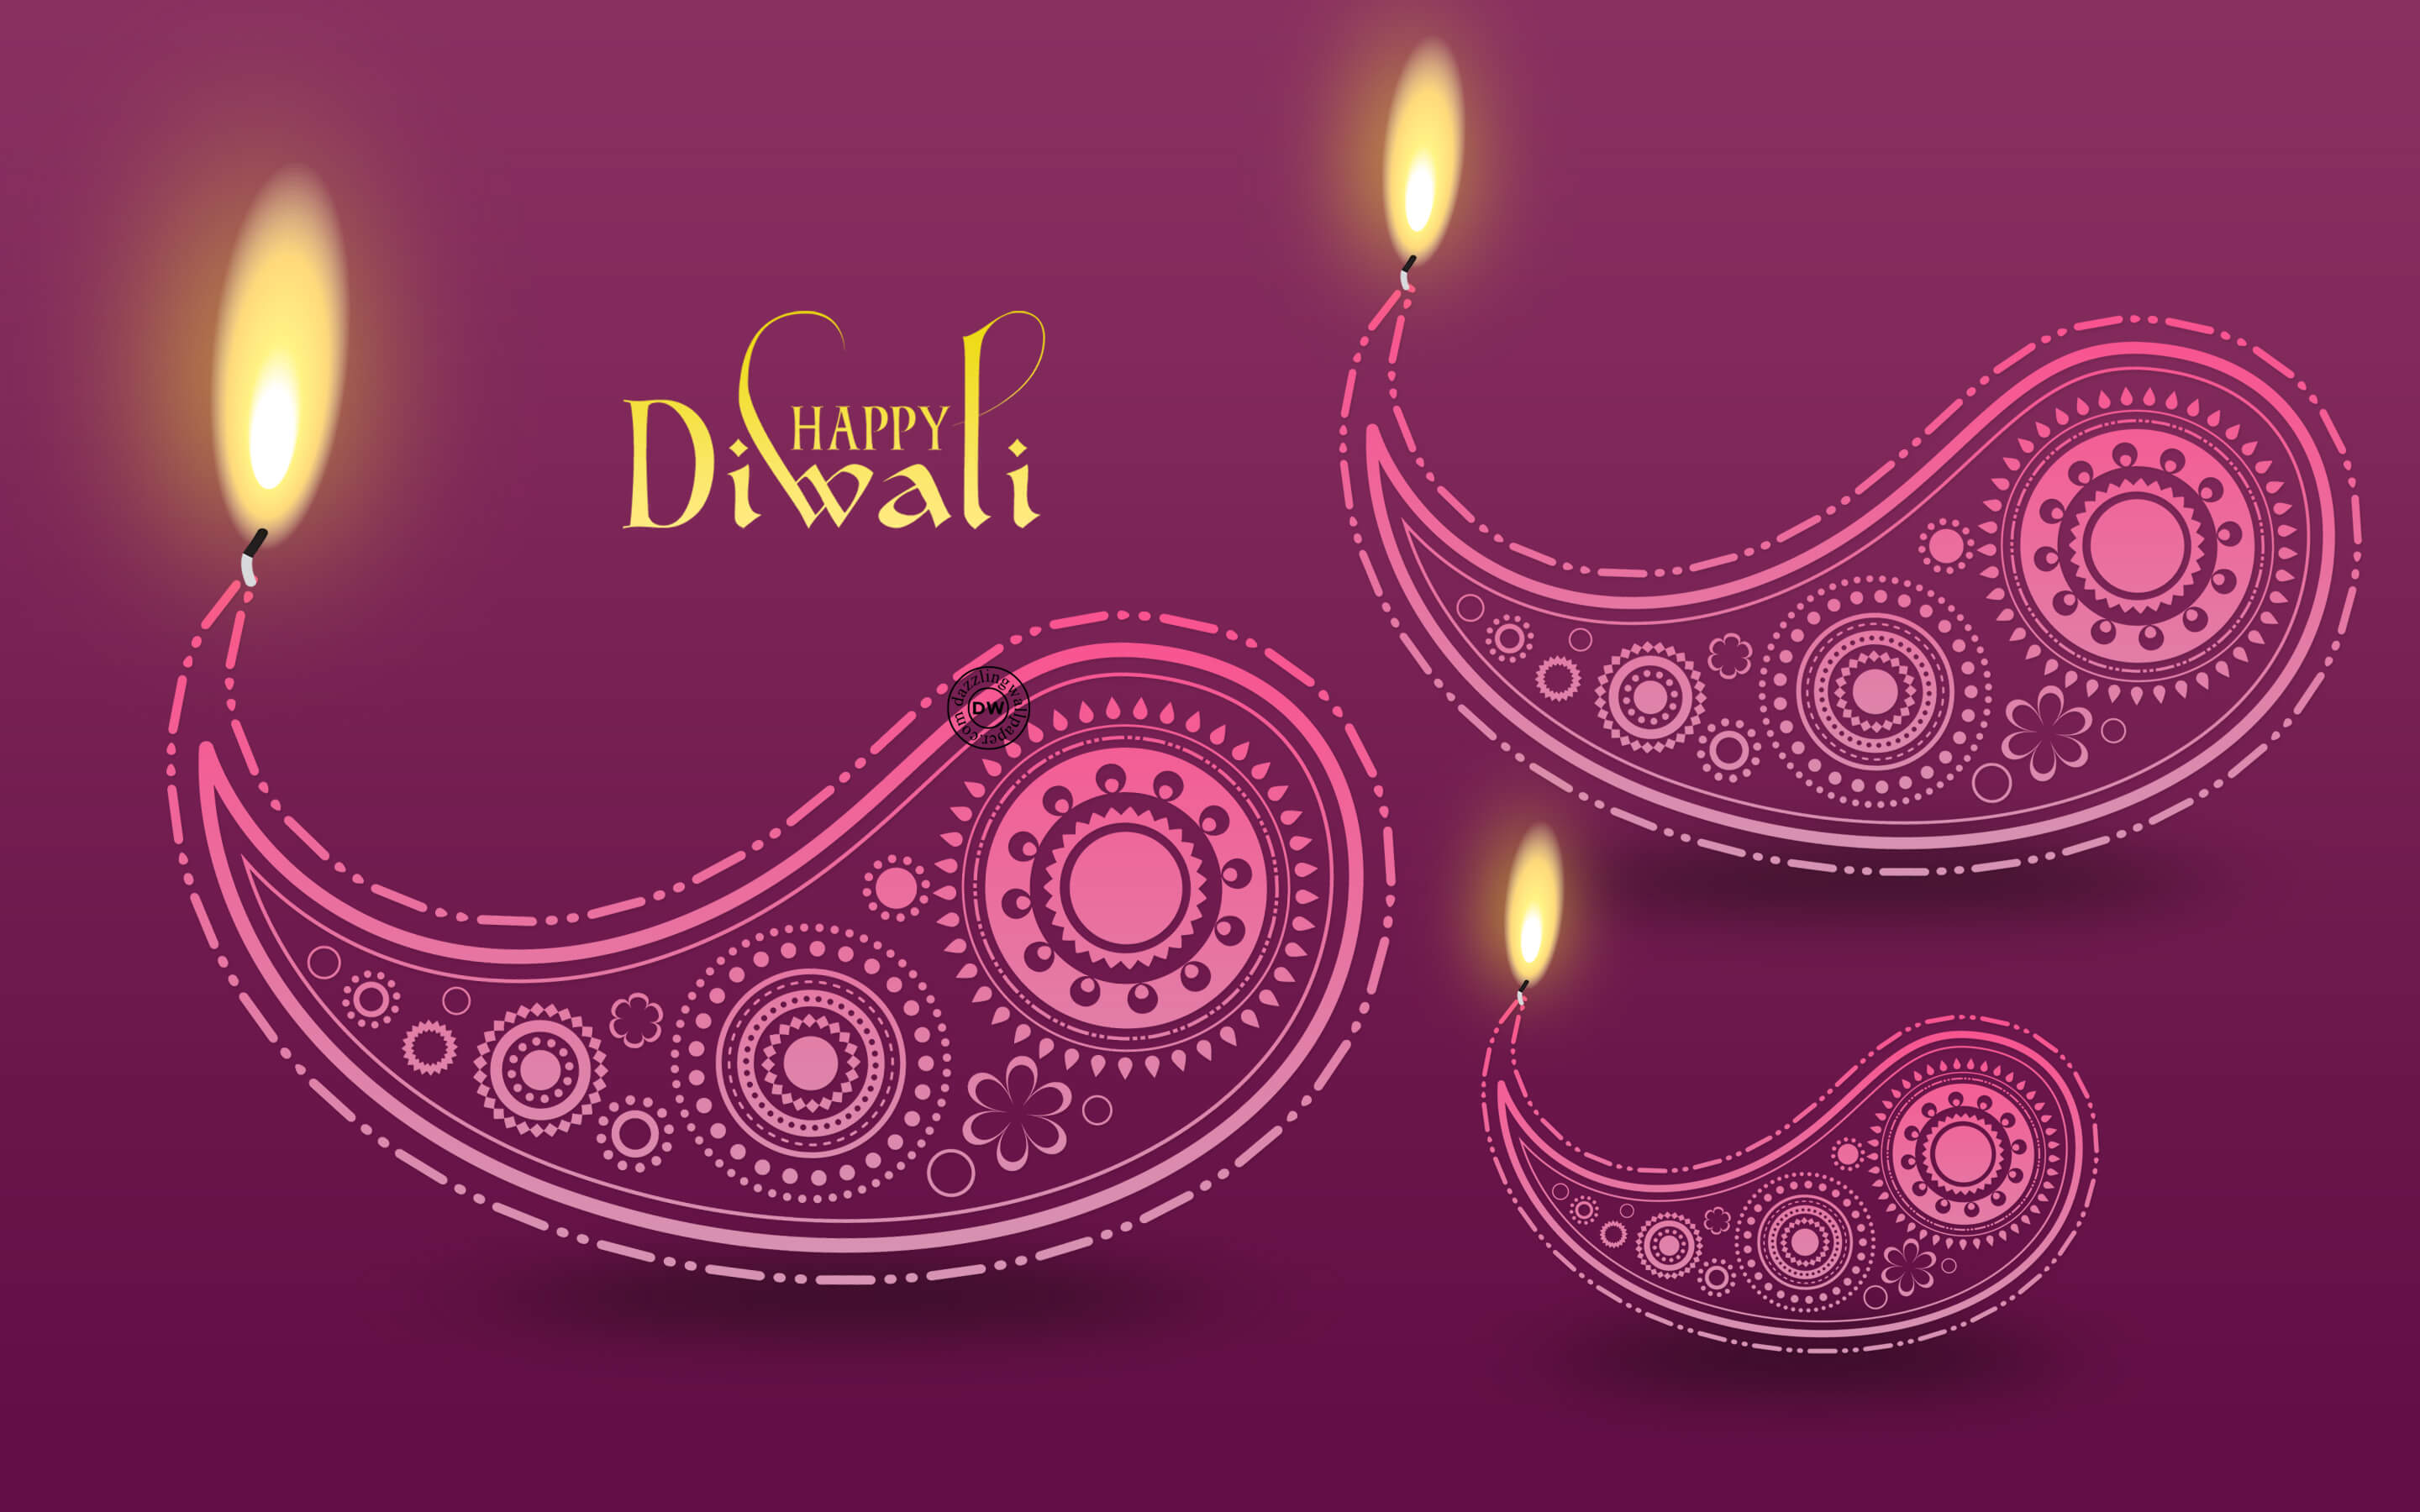 Download-Happy-Diwali-2015-HD-Wallpapers-facebook-mobile-desktop-cgfrog-9